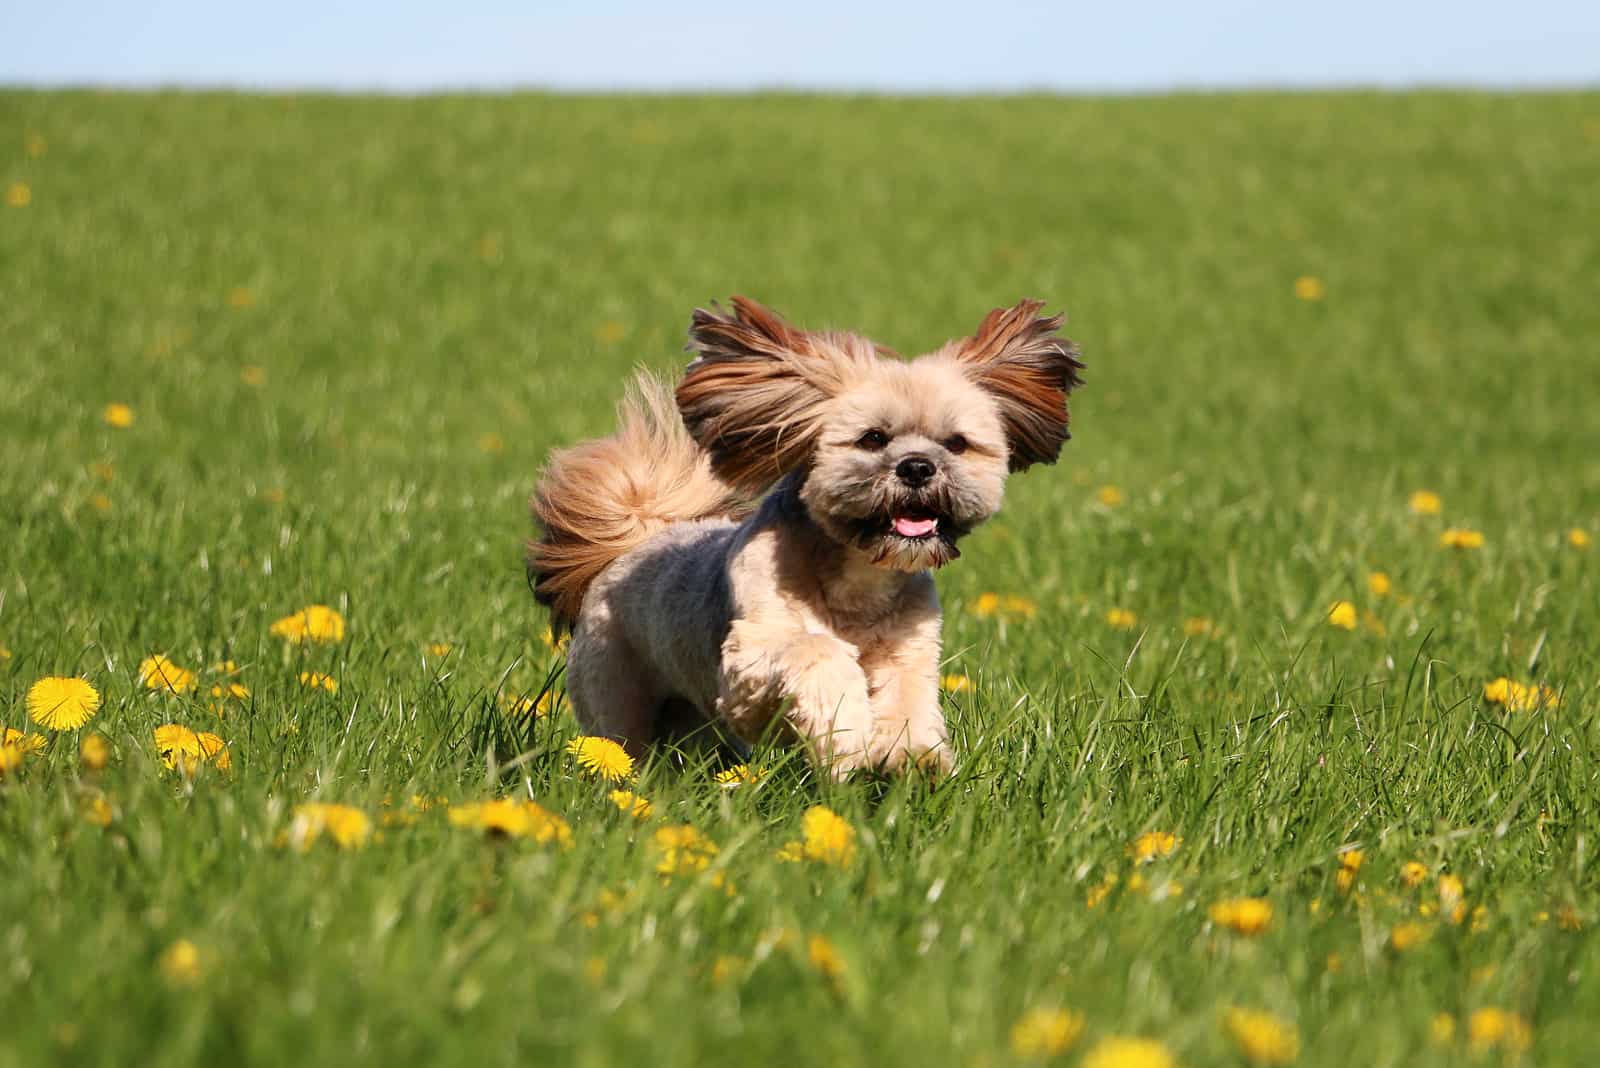 Lhasa Apso puppy running on grass